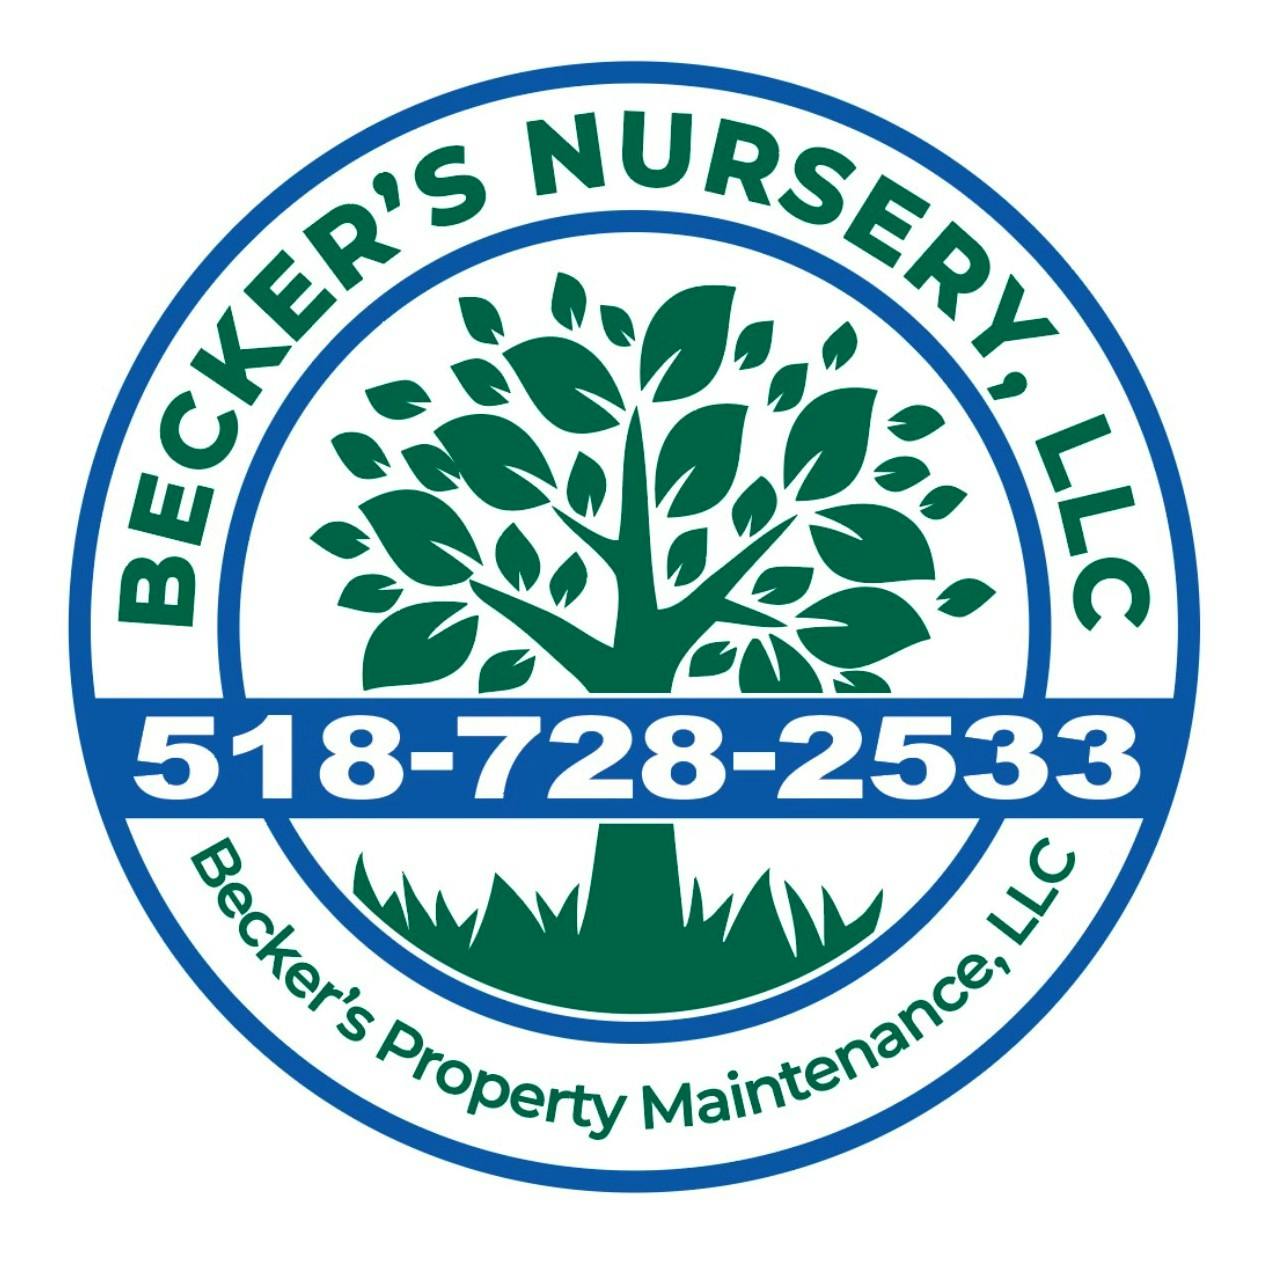 Becker's Nursery Logo - (518) 728-2533